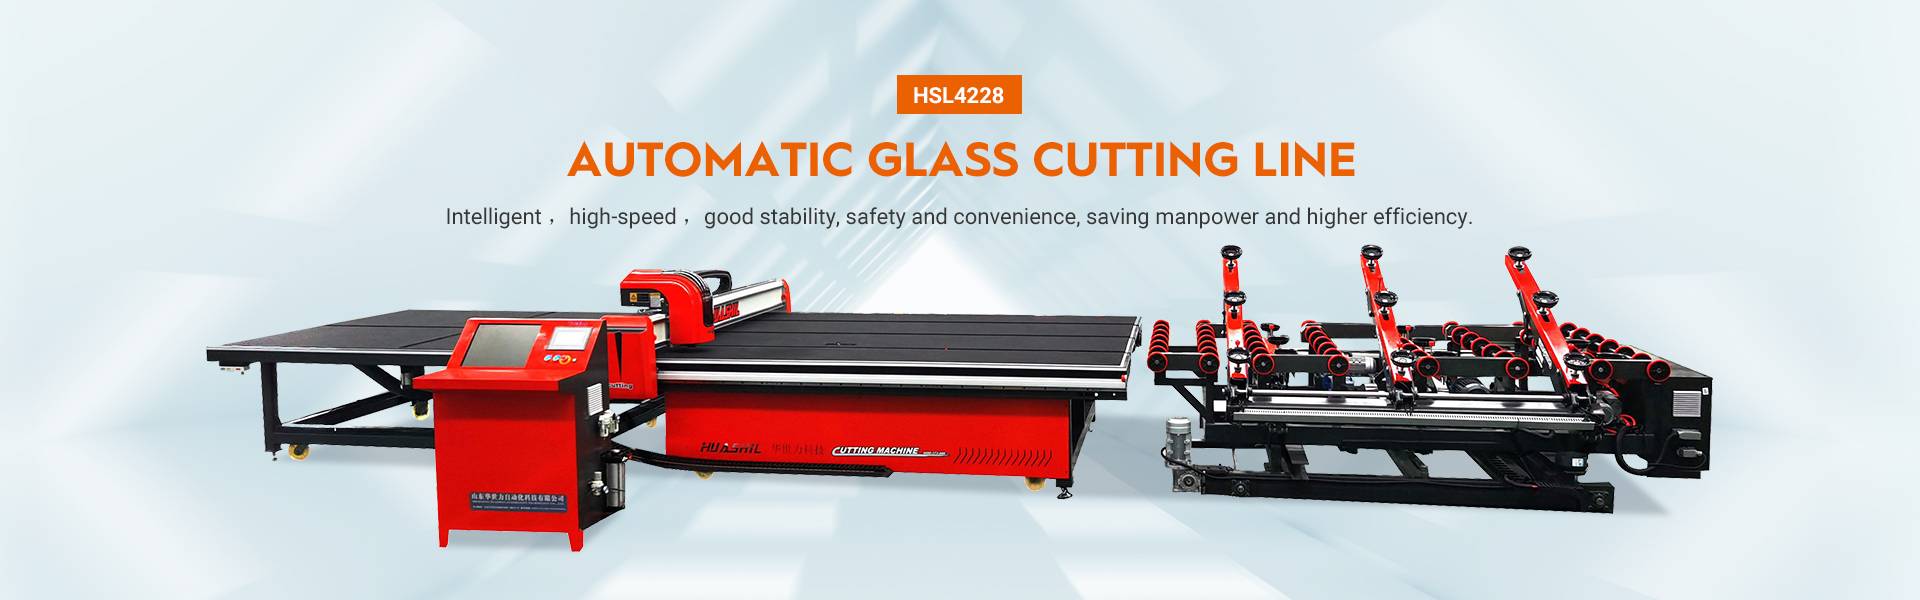 Automatic glass cutting line